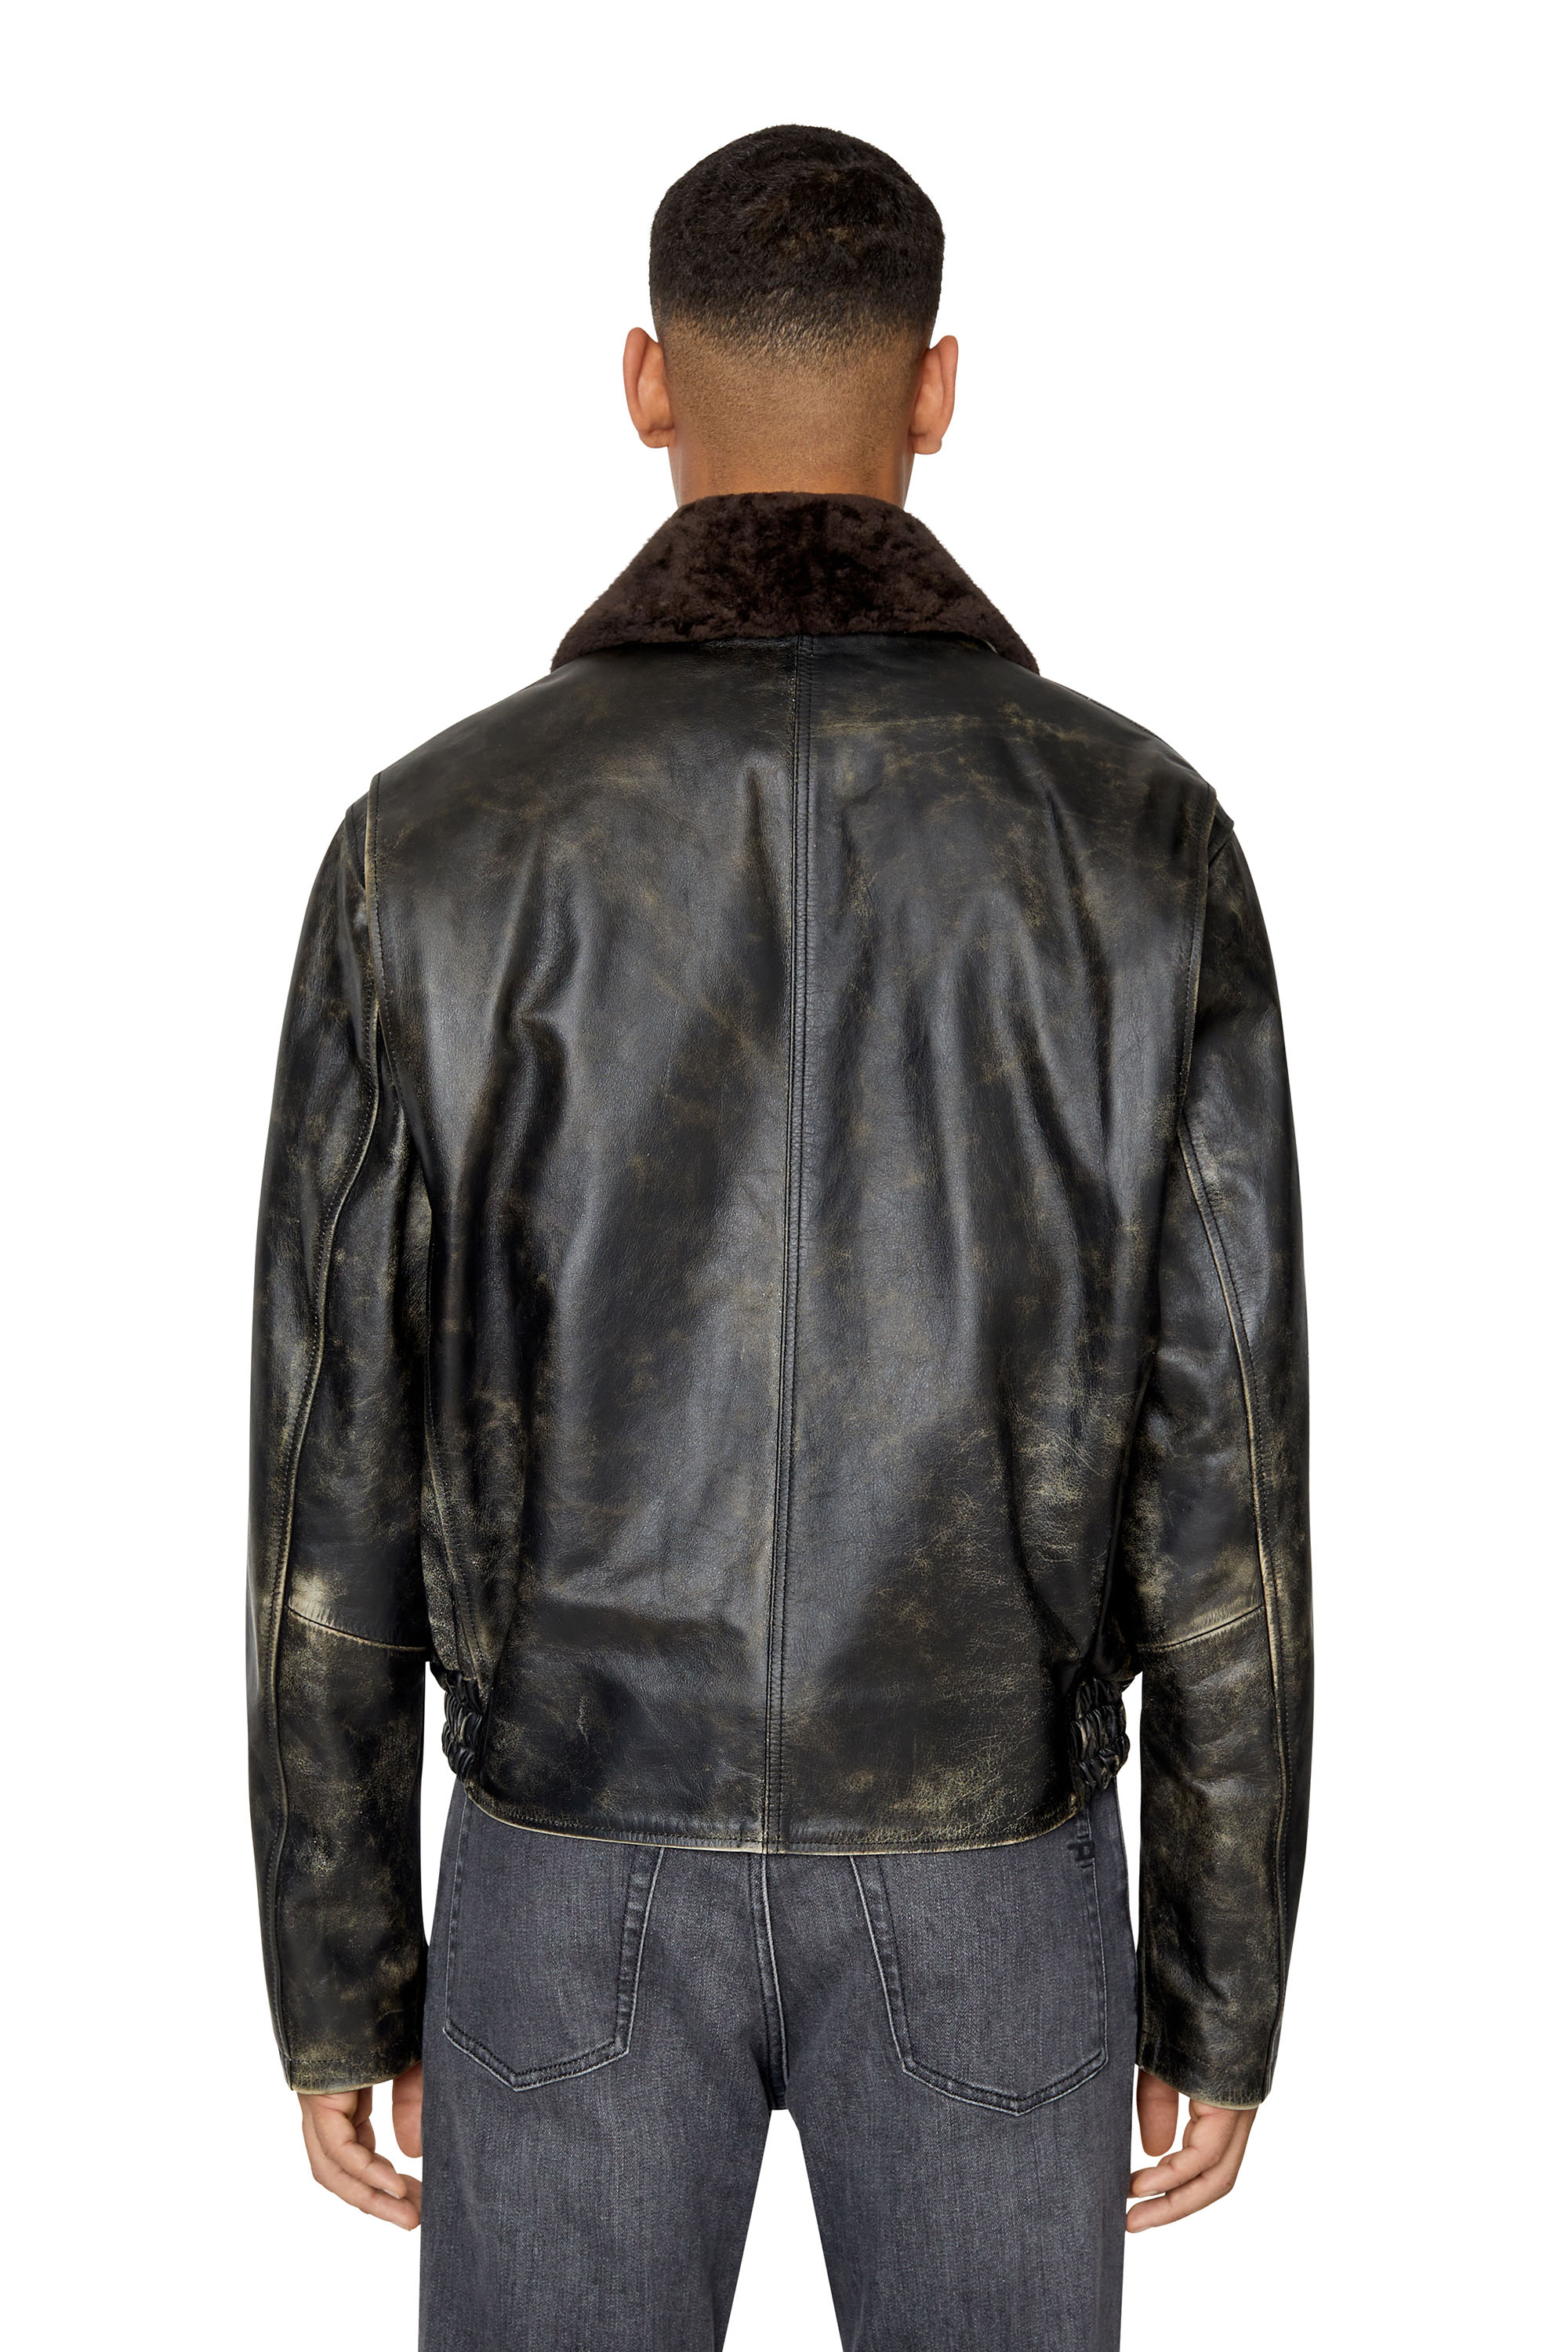 Diesel Genuine Leather Jacket iuu.org.tr